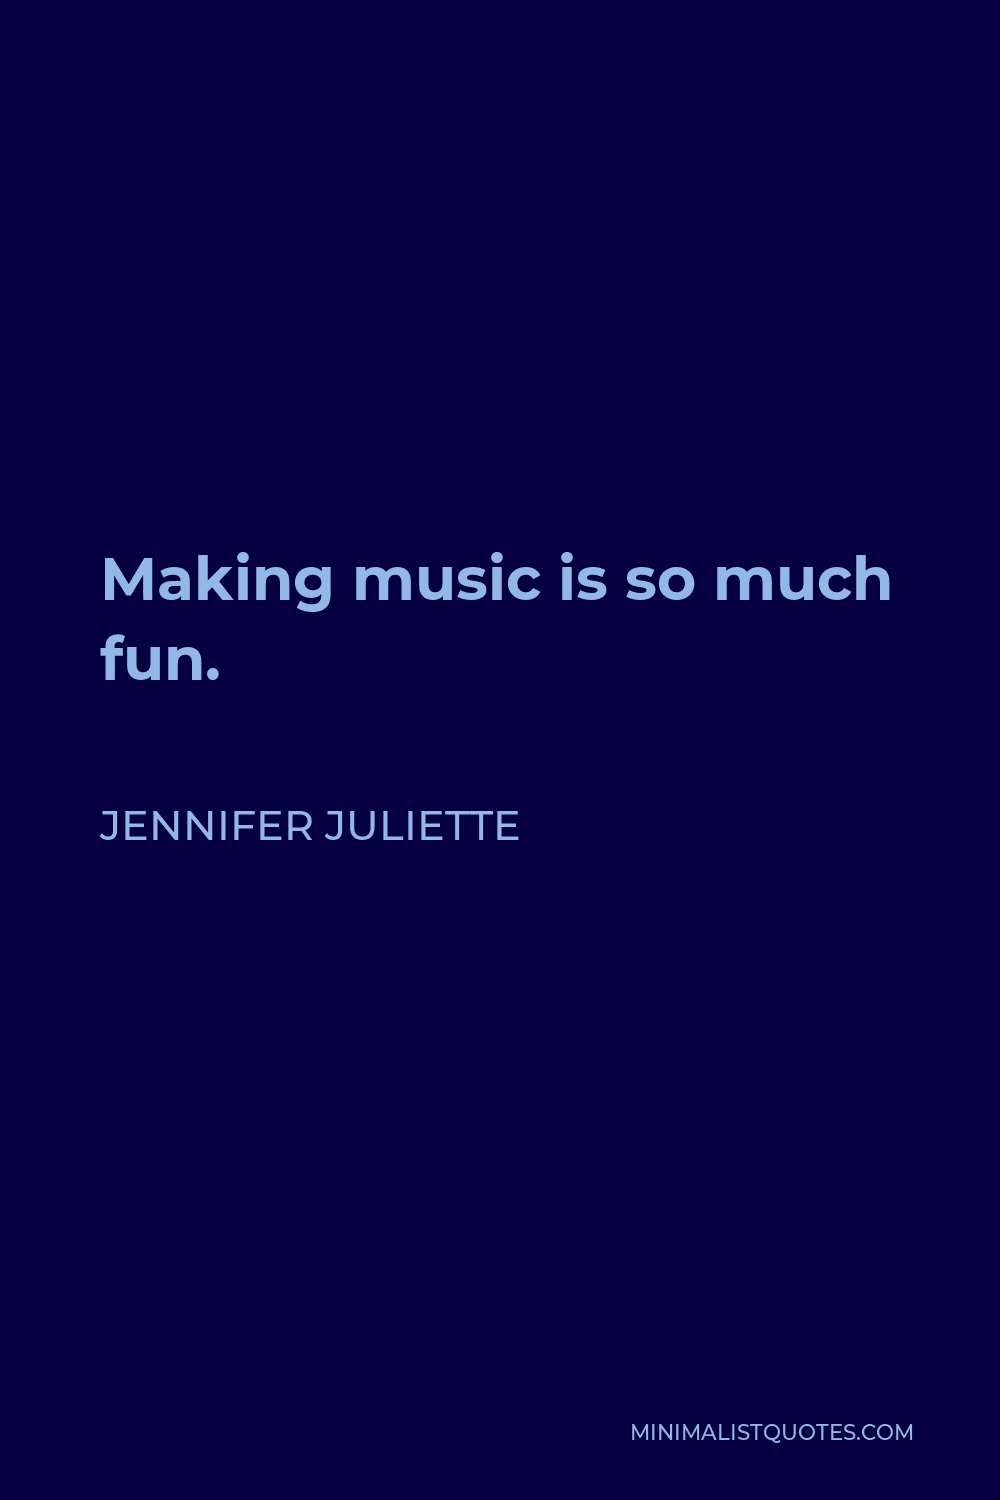 Jennifer Juliette Quote - Making music is so much fun.